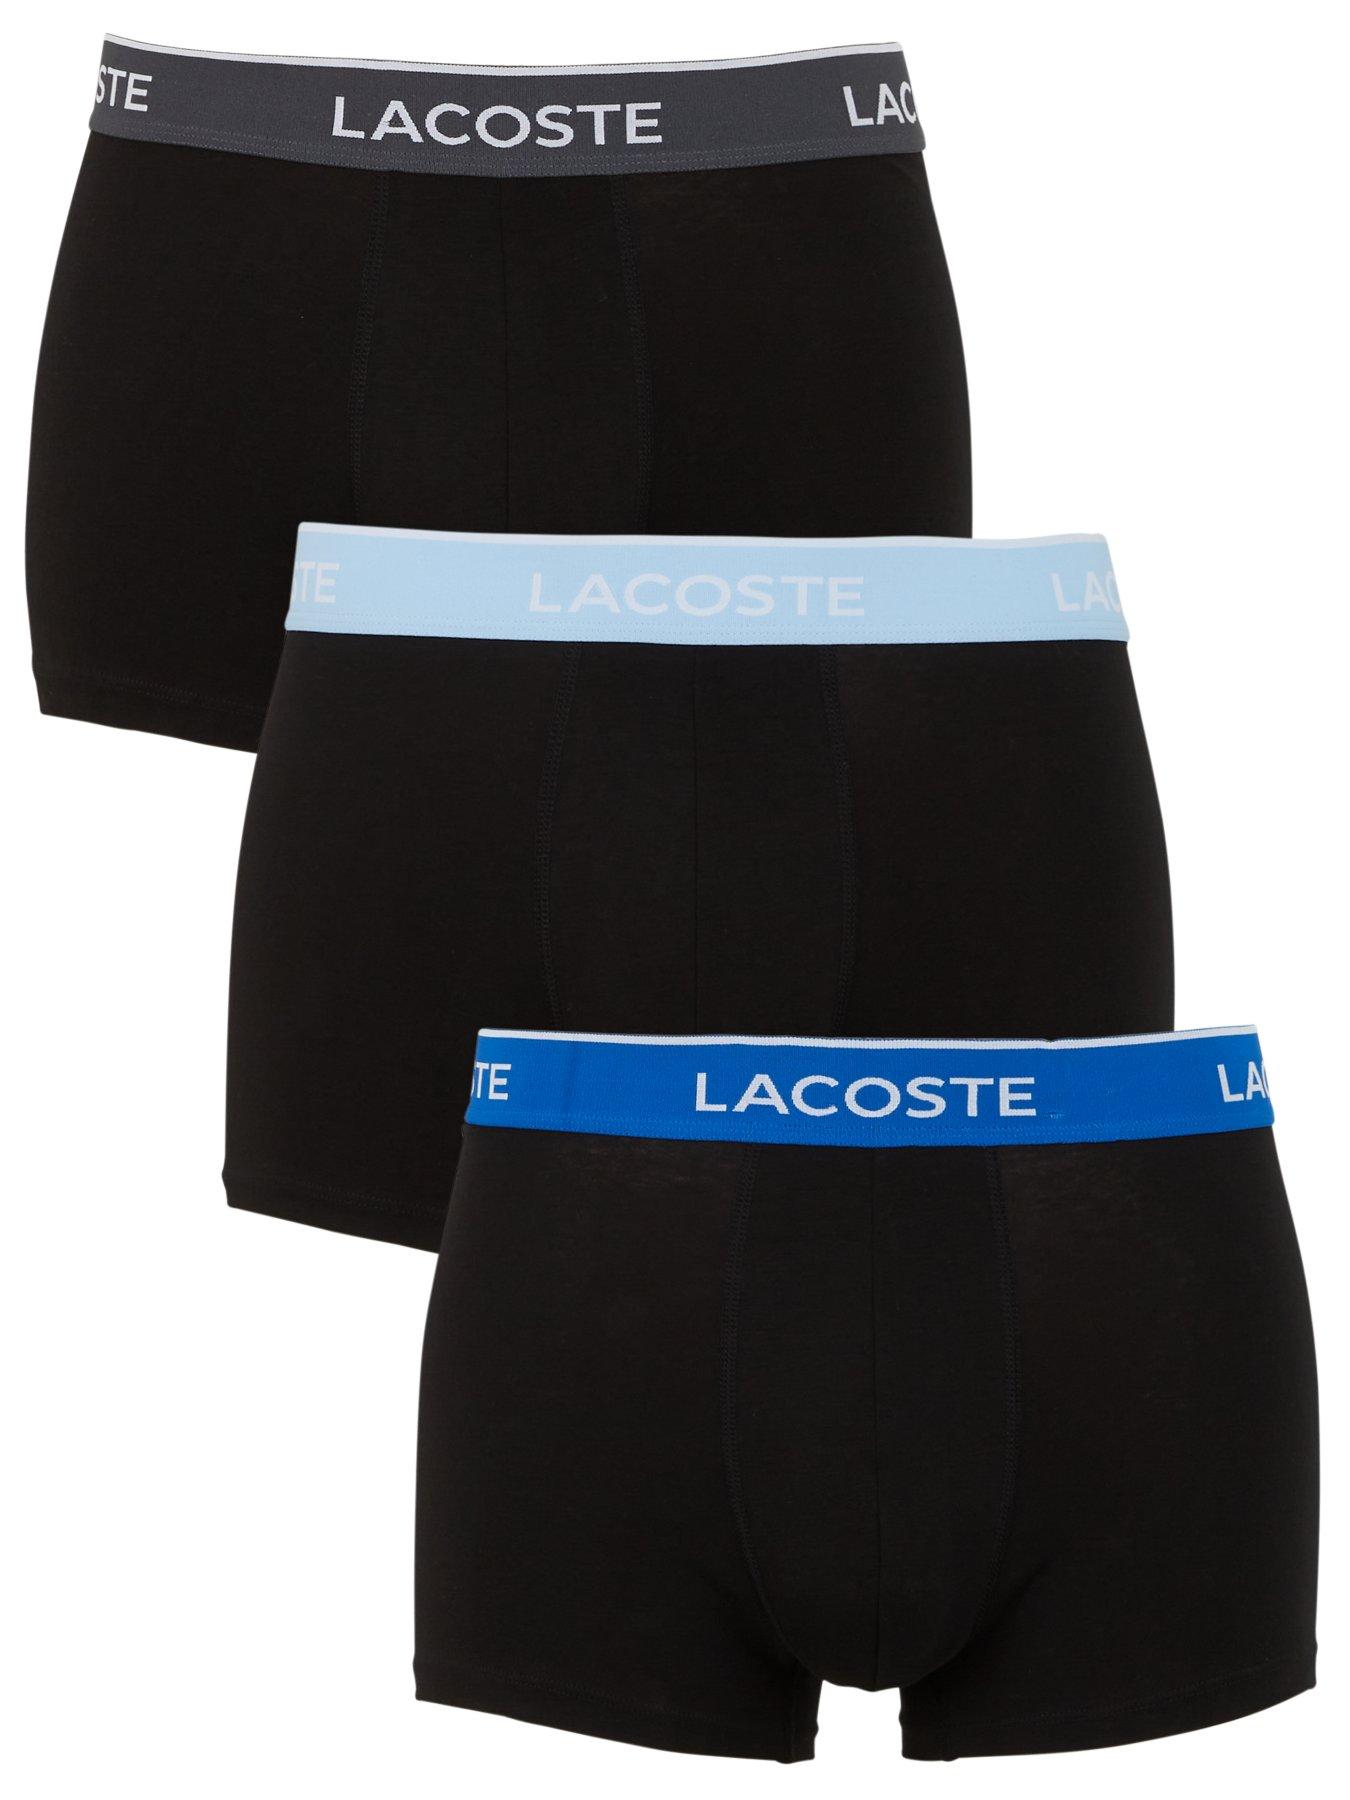 Lacoste essentials 3 pack trunks in multi